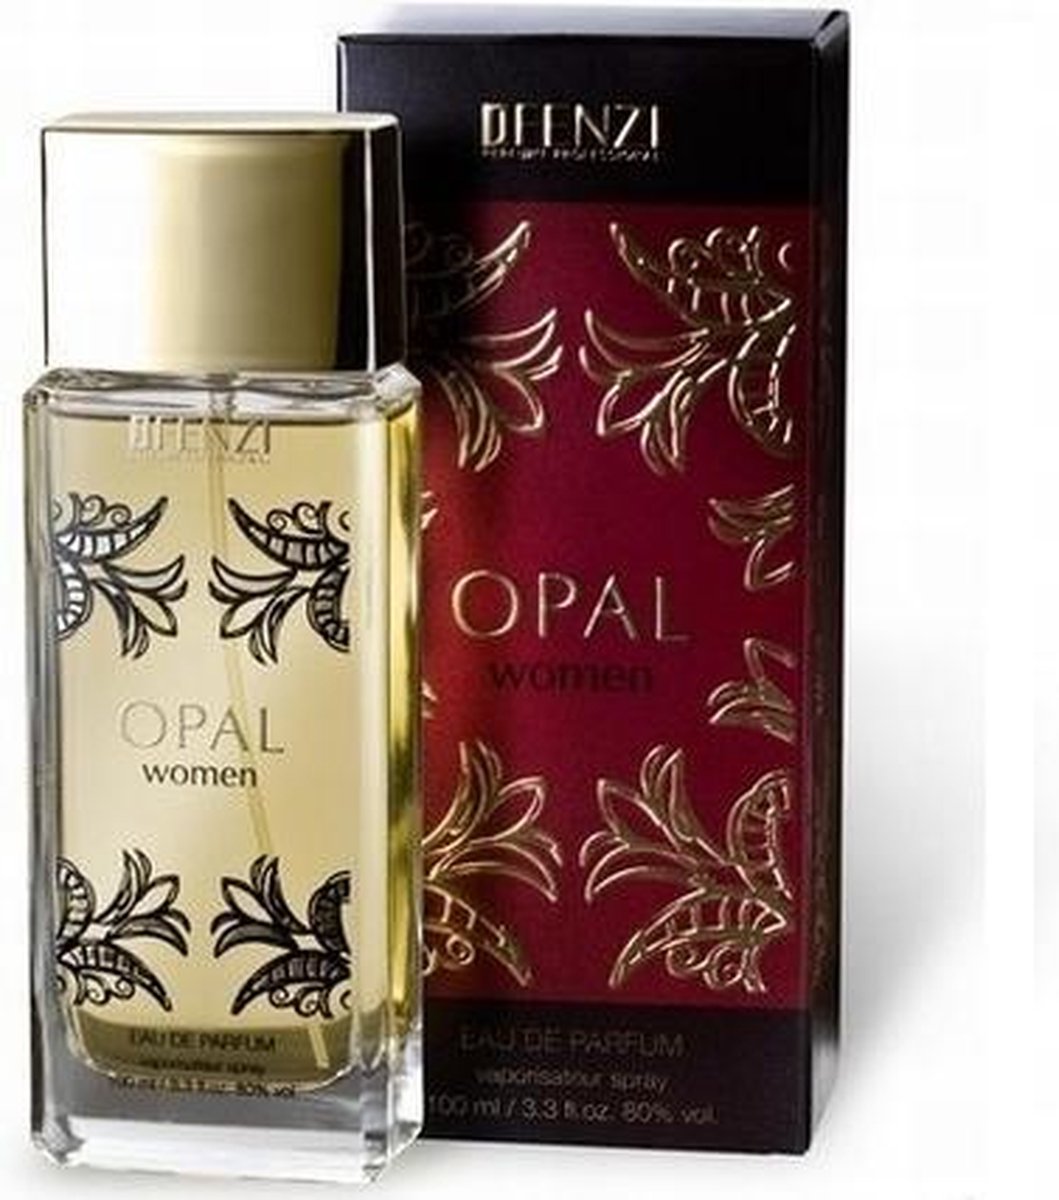 Oriëntaals, Kruidige merkgeur voor dames - JFenzi - Eau de parfum - Opal Women - 100ml - 80% ✮✮✮✮✮ - Cadeau Tip !